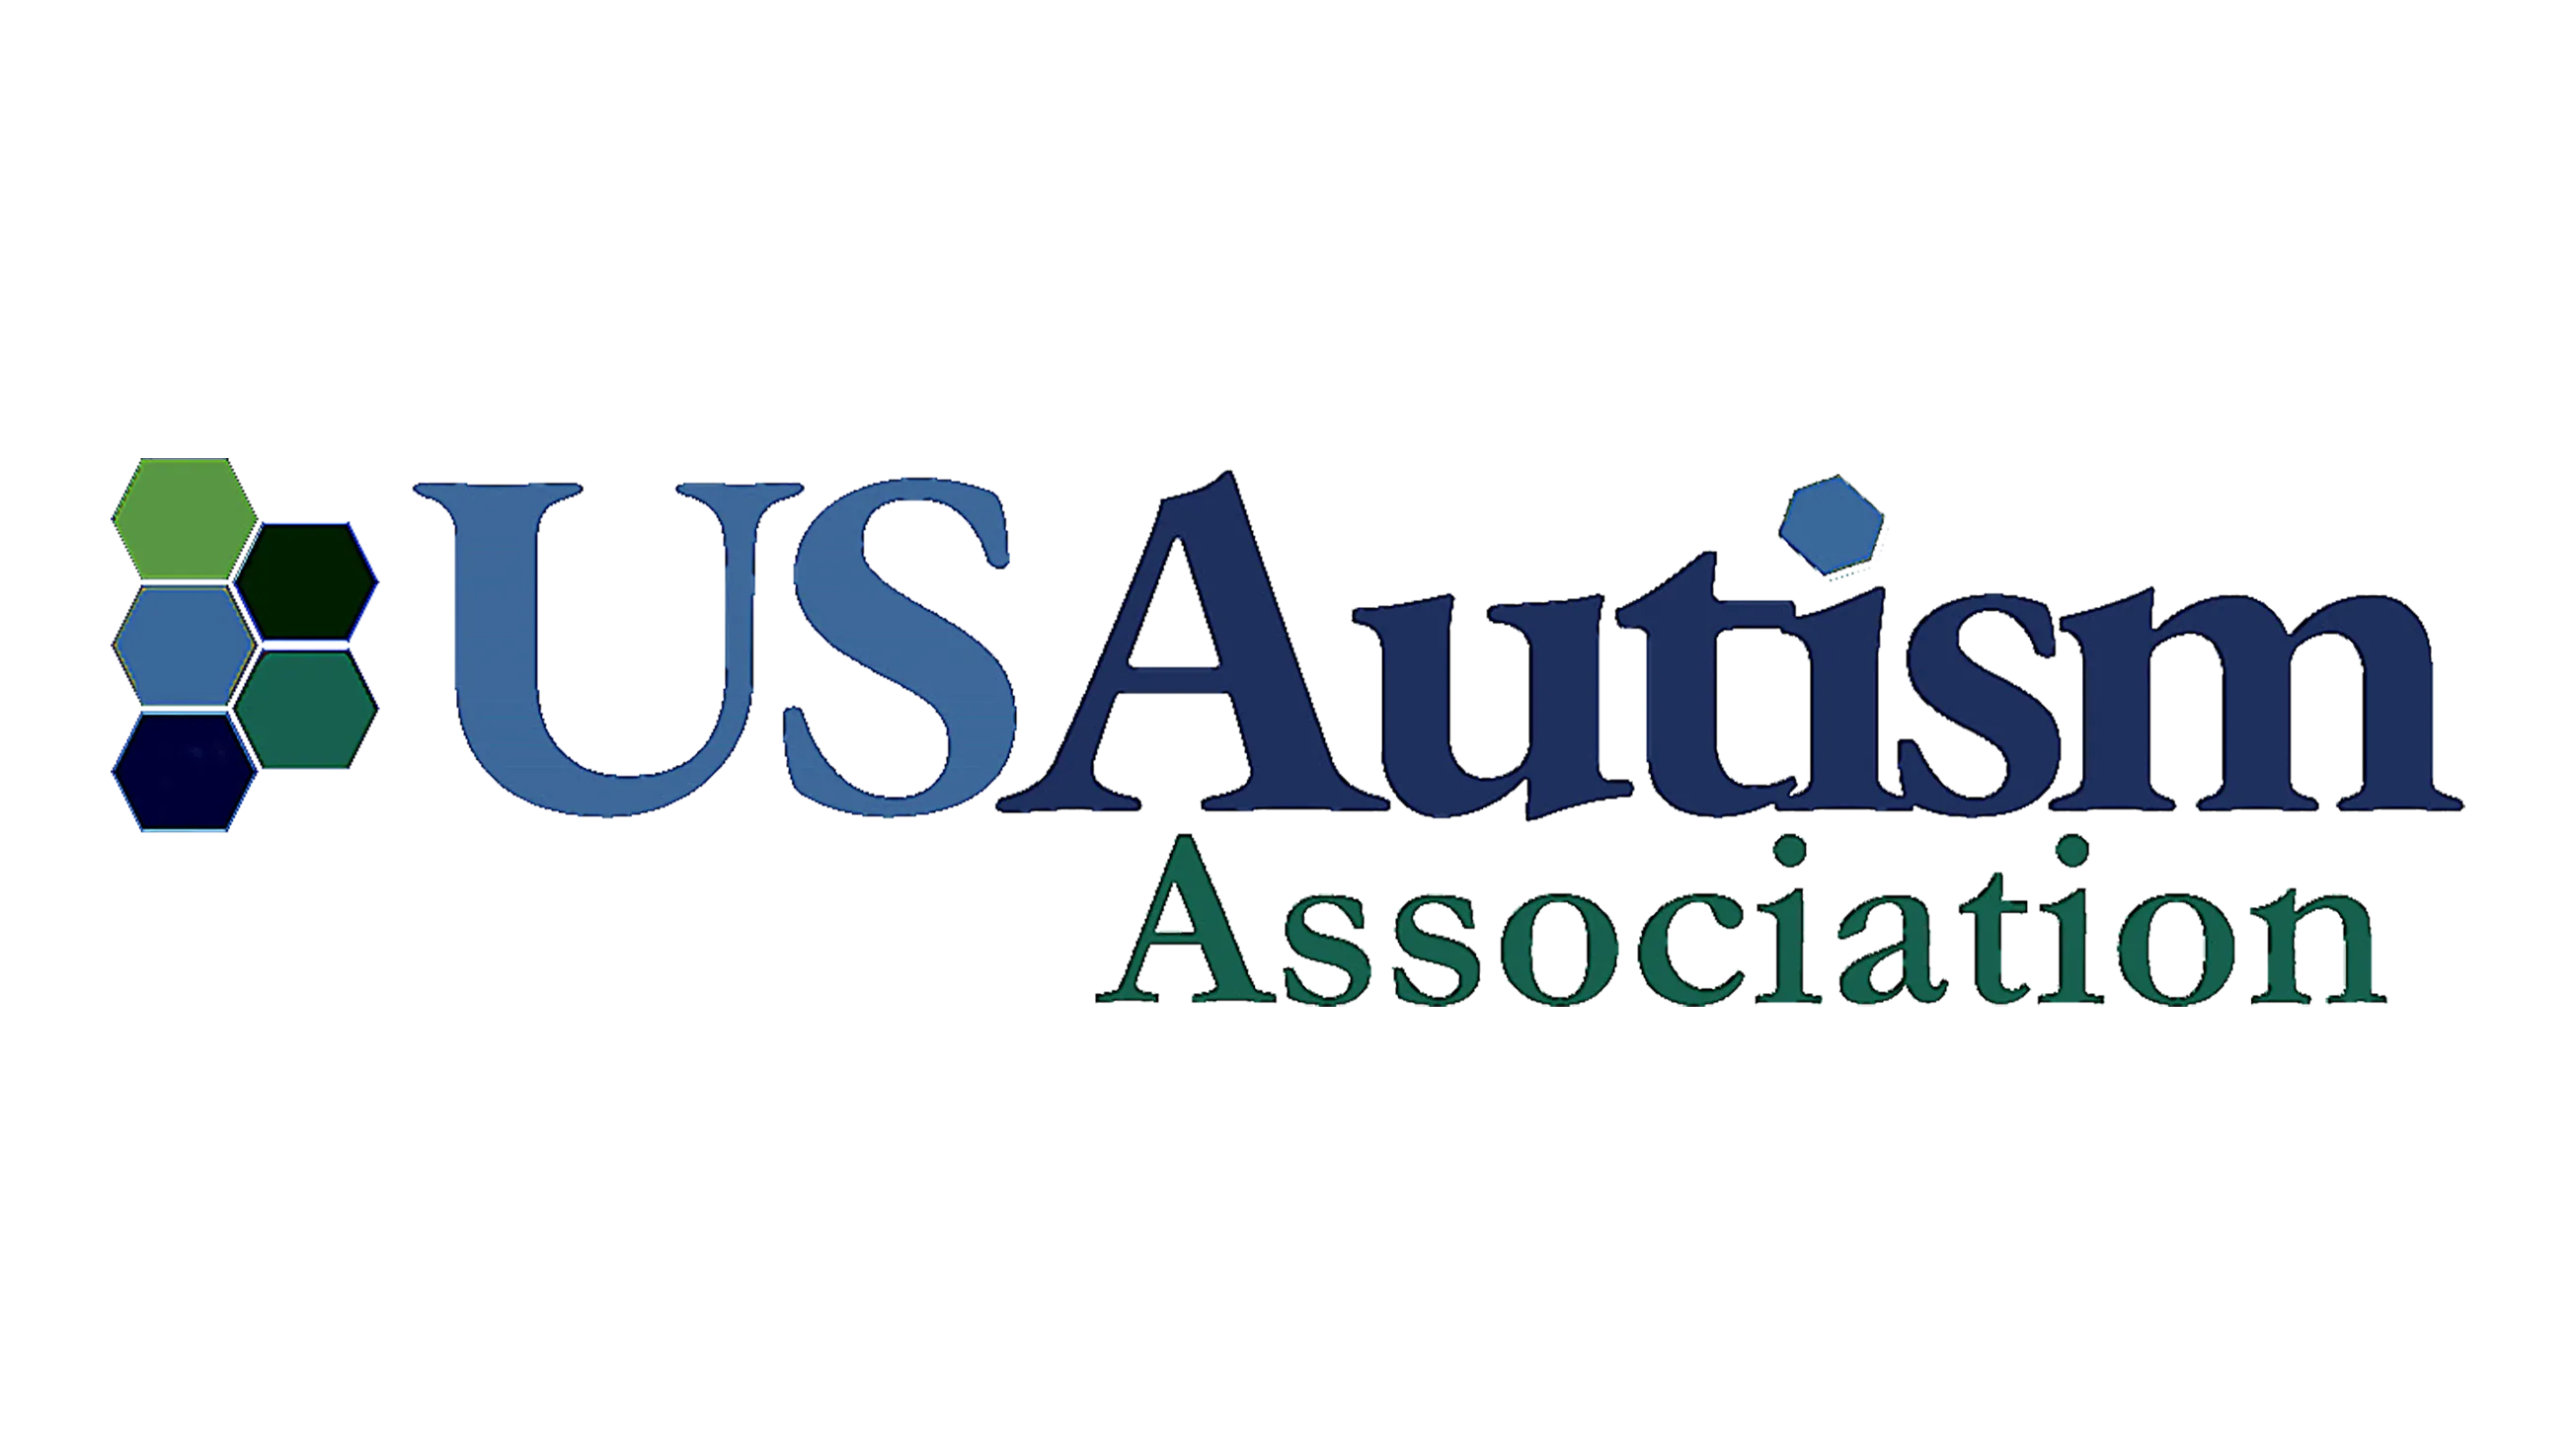 US Autism Association